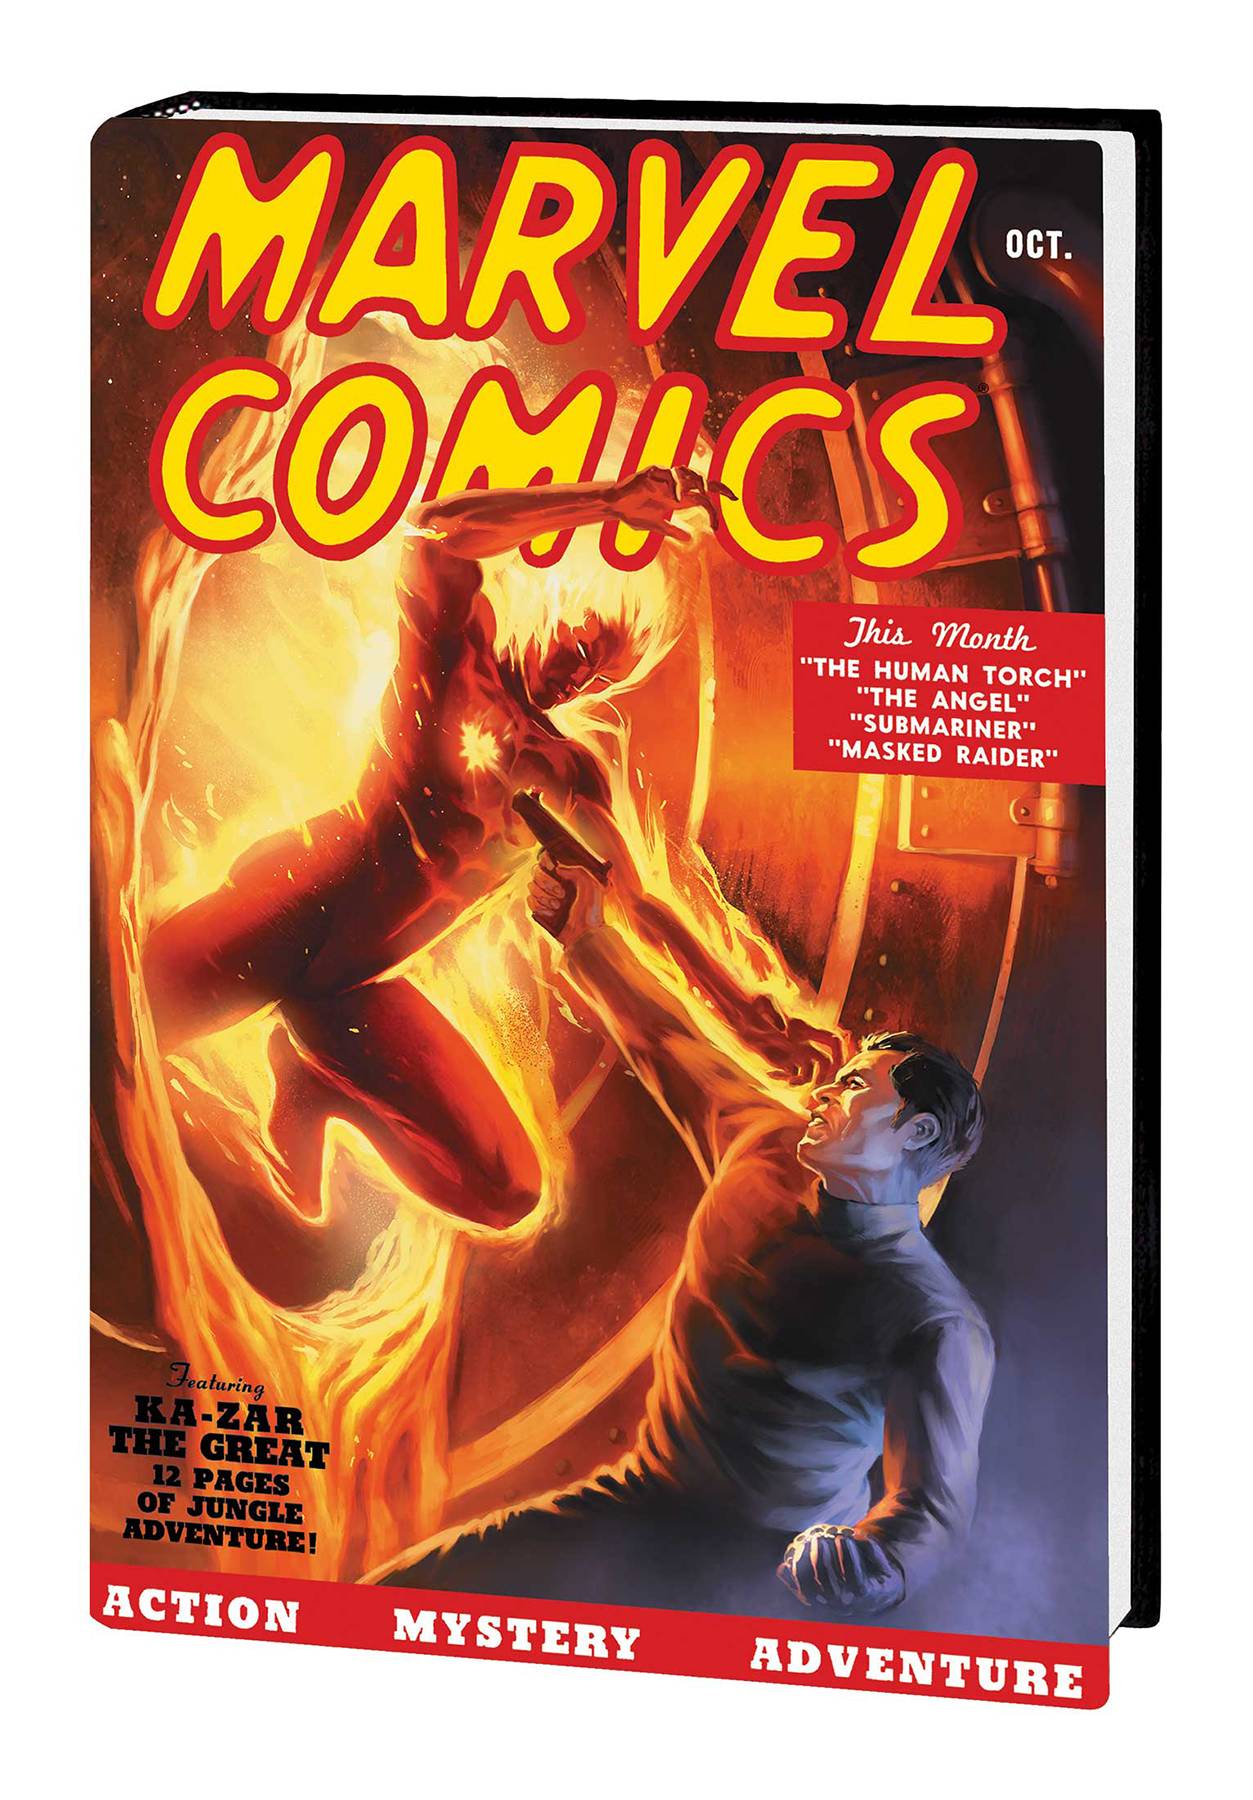 MARVEL COMICS #1 - 80TH ANNIVERSARY EDITION HC